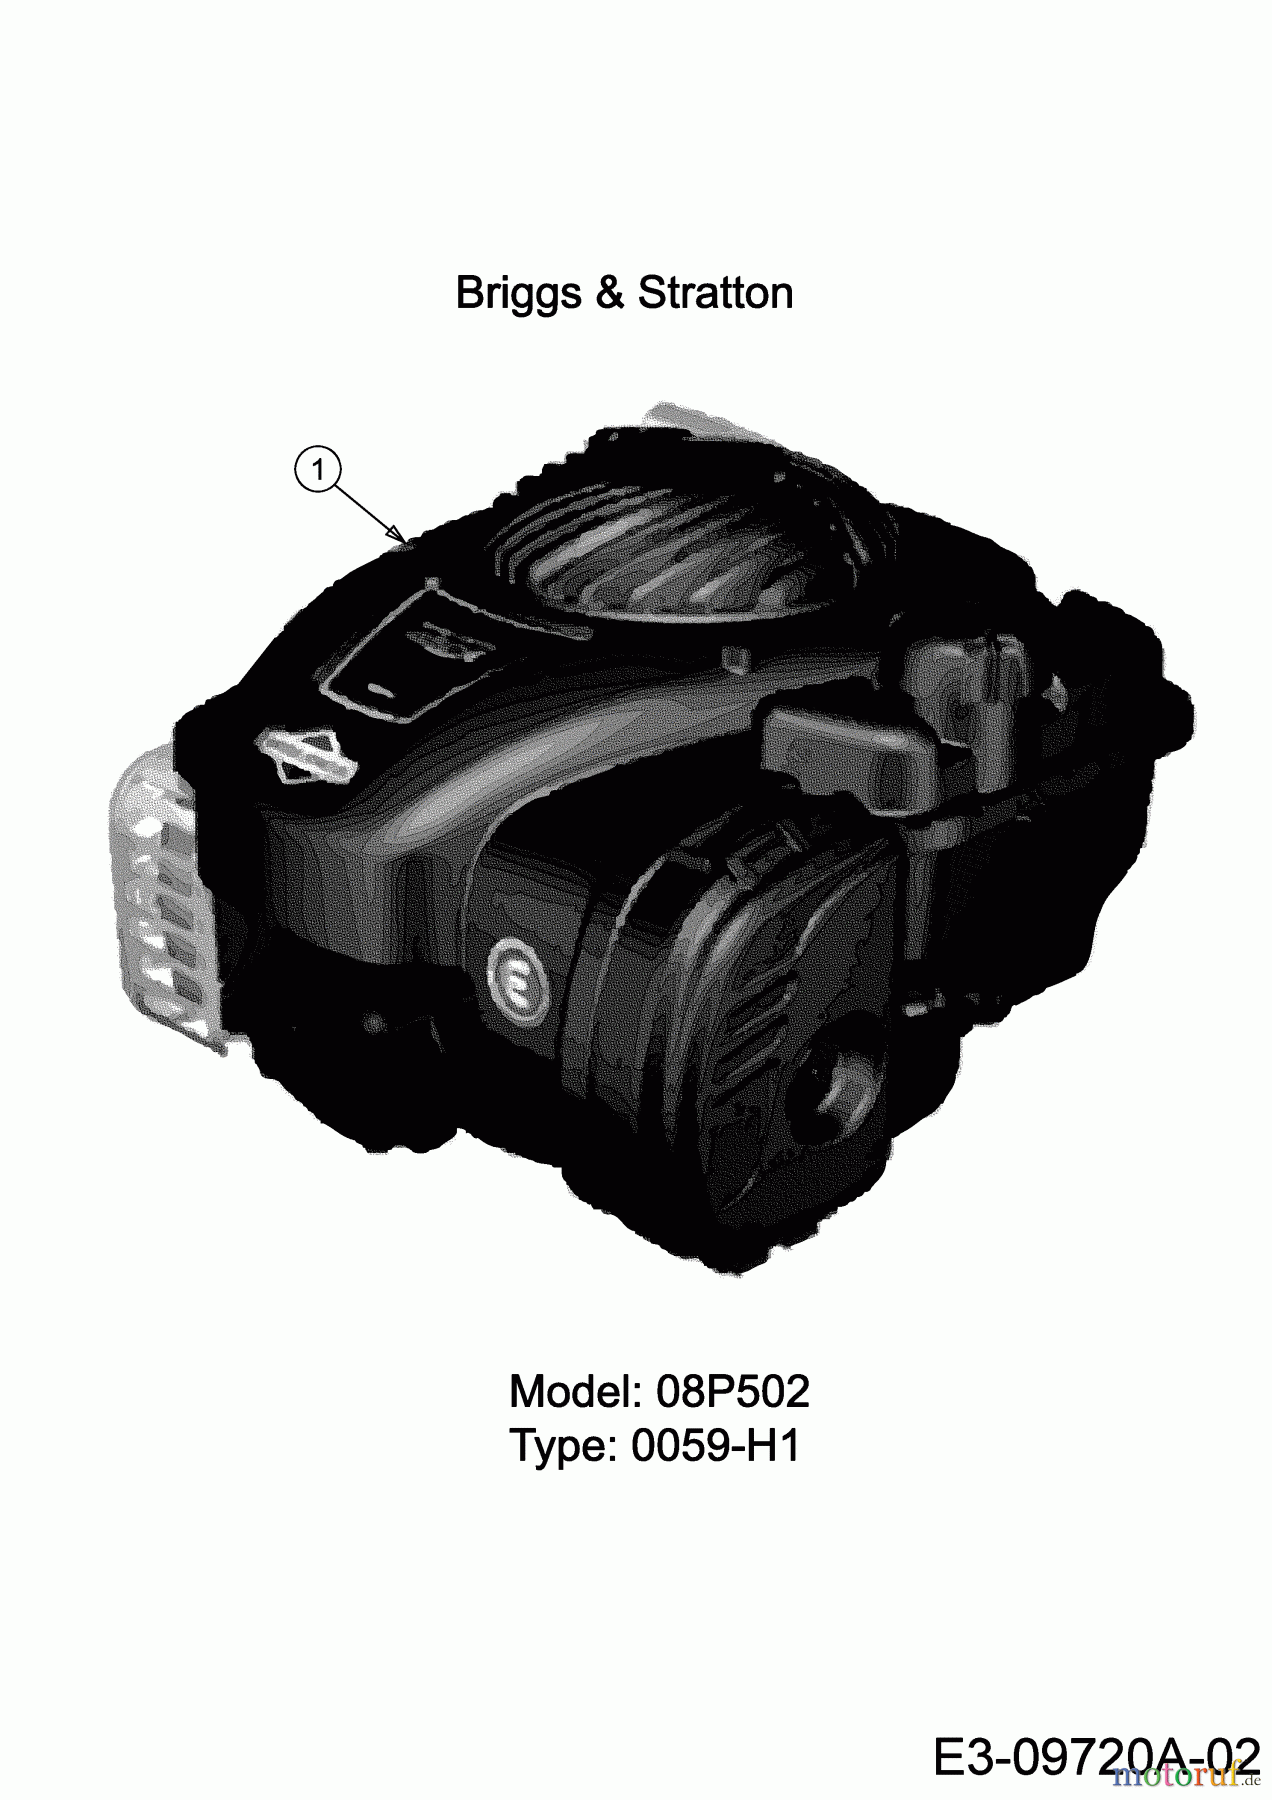  MTD Petrol mower 51 BC 11D-025J600 (2019) Engine Briggs & Stratton